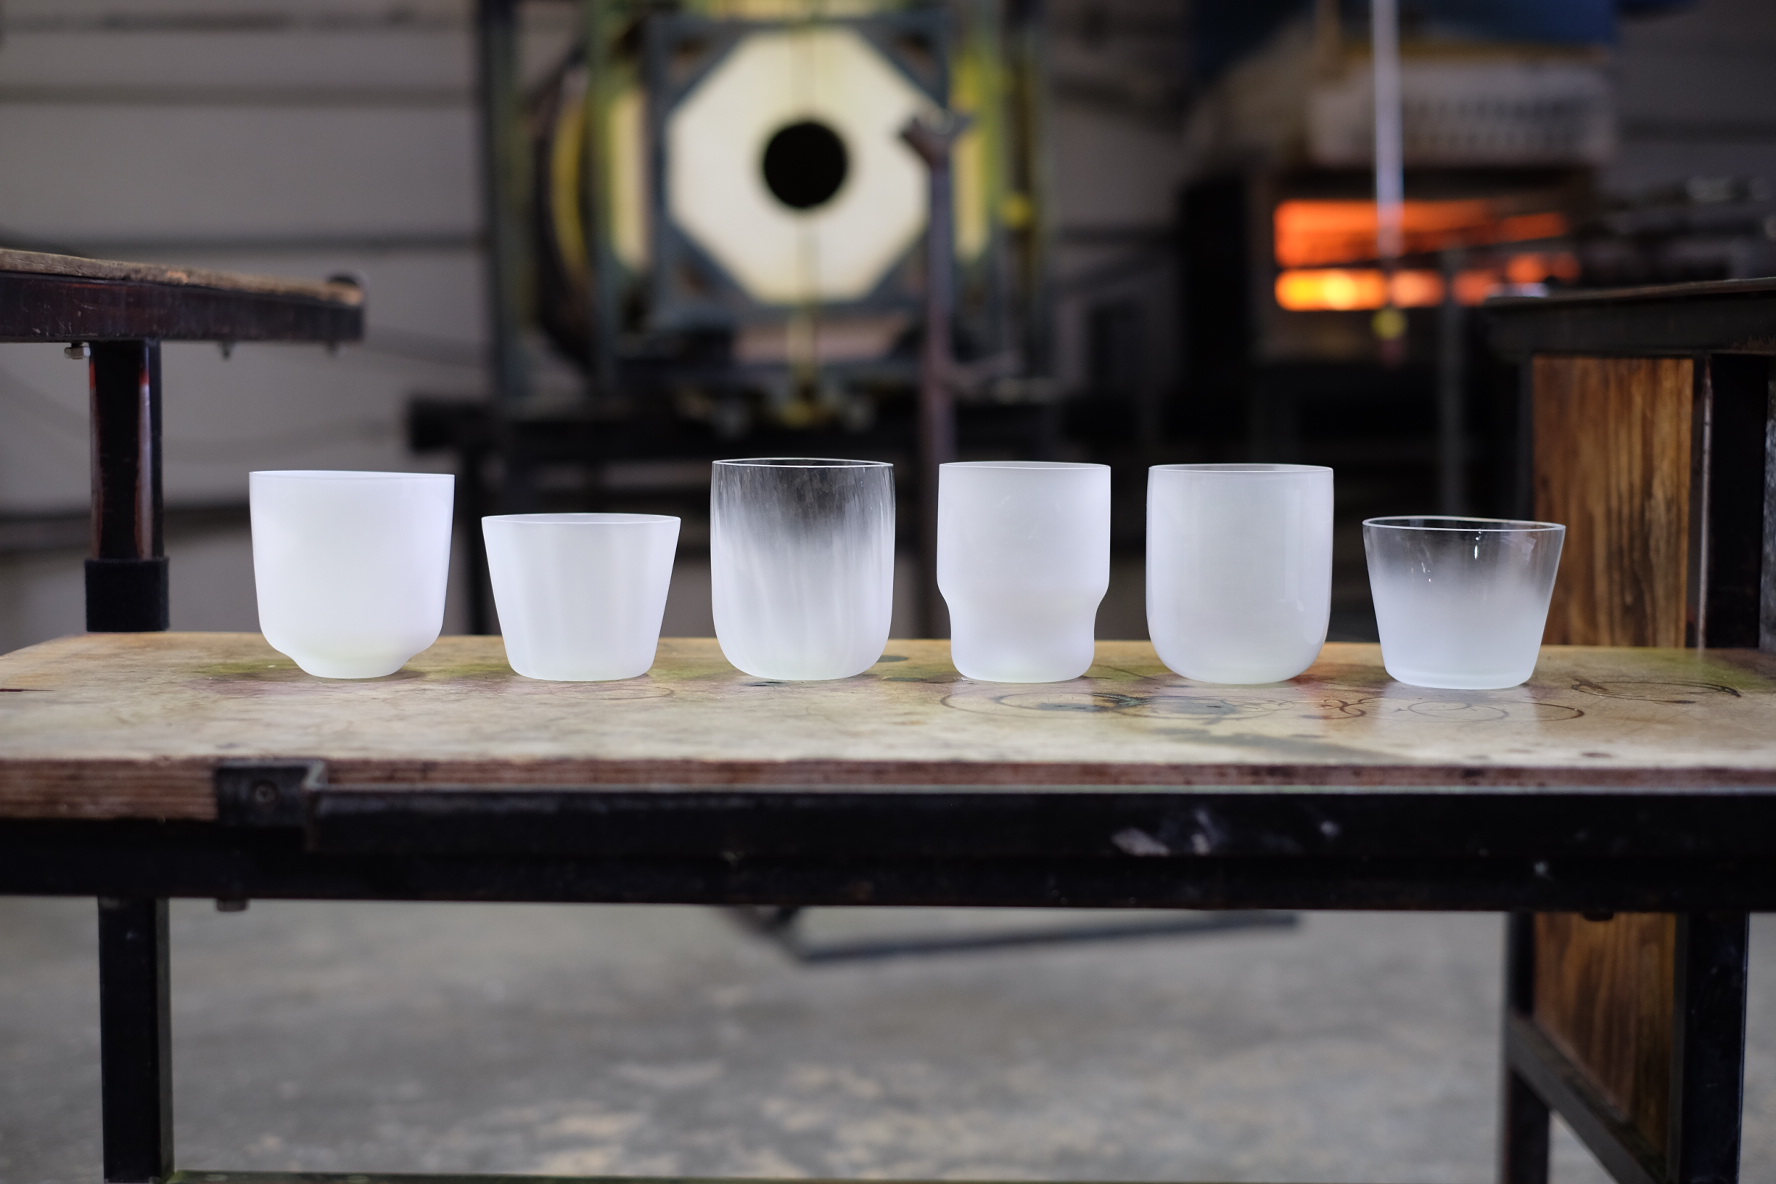 Superduperstudio designs spillproof wine glasses